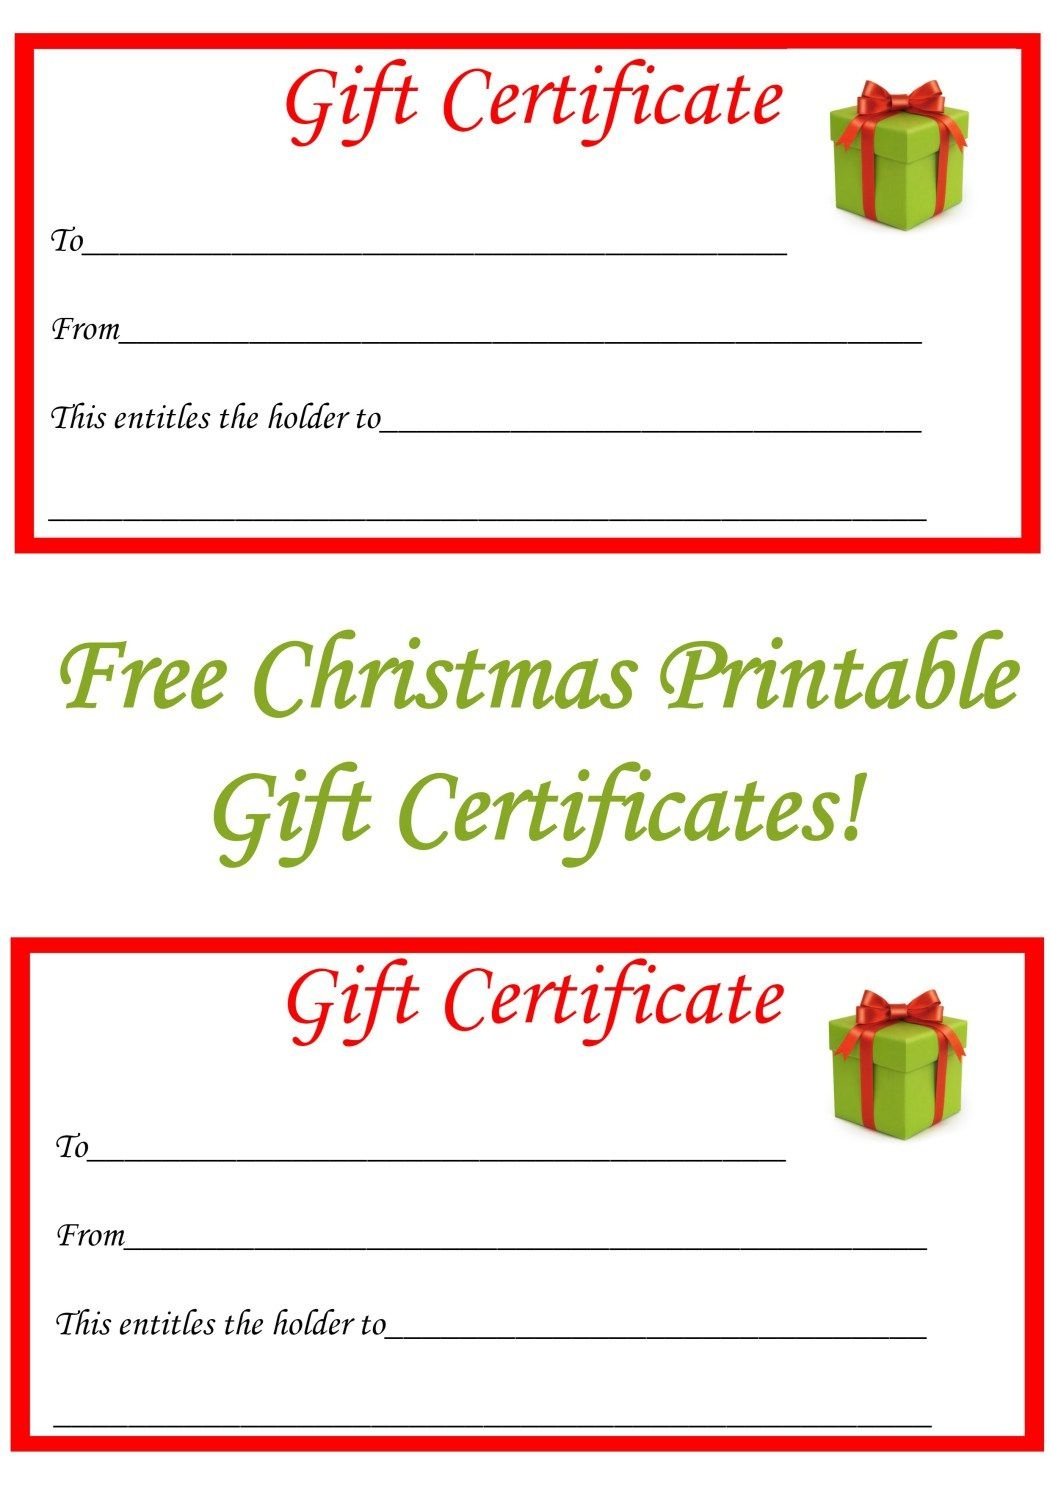 Free Christmas Printable Gift Certificates | Gift Ideas | Christmas - Free Printable Christmas Gift Cards